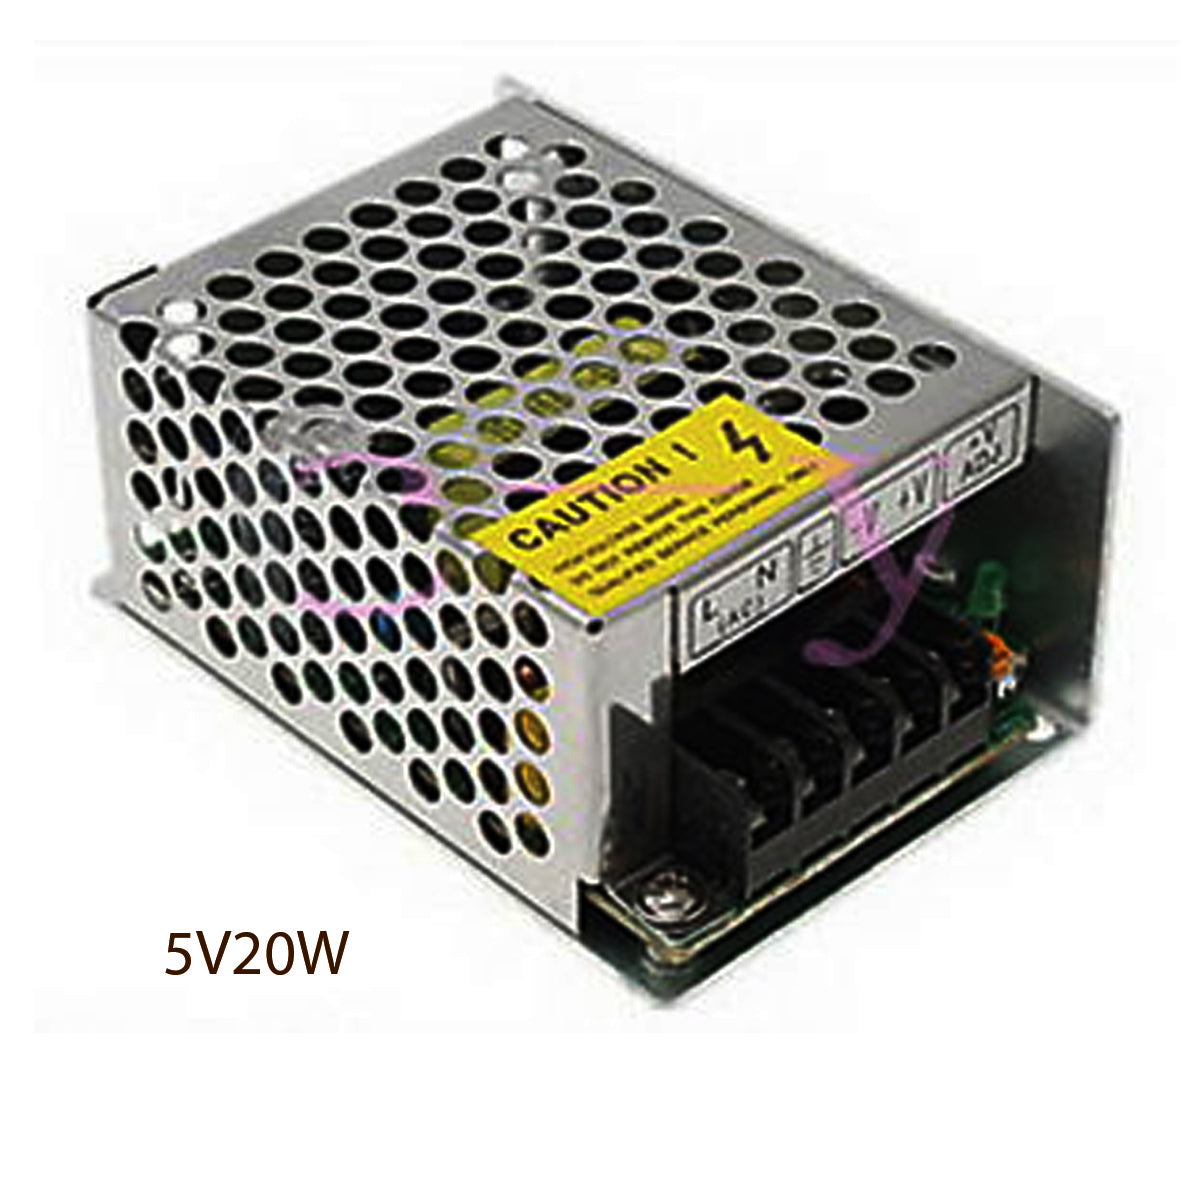 IP20 DC5V LED Driver Switching Power Supply Transformer No Waterproof~1409 - LEDSone UK Ltd